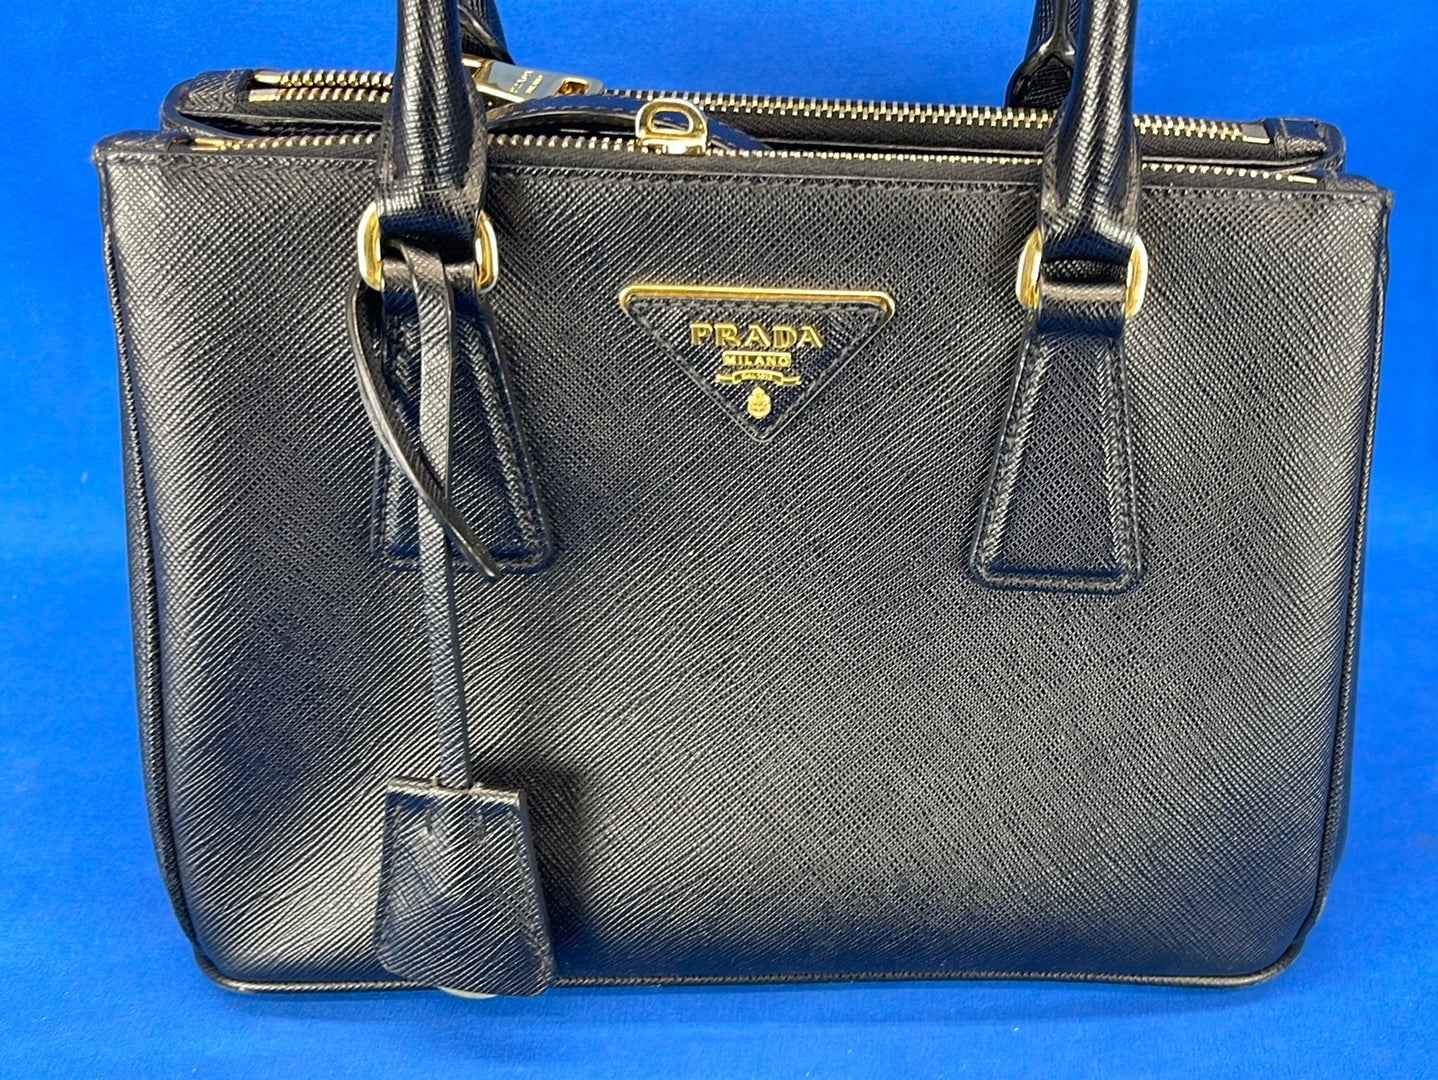 Small Prada Galleria Saffiano Leather Bag - Black